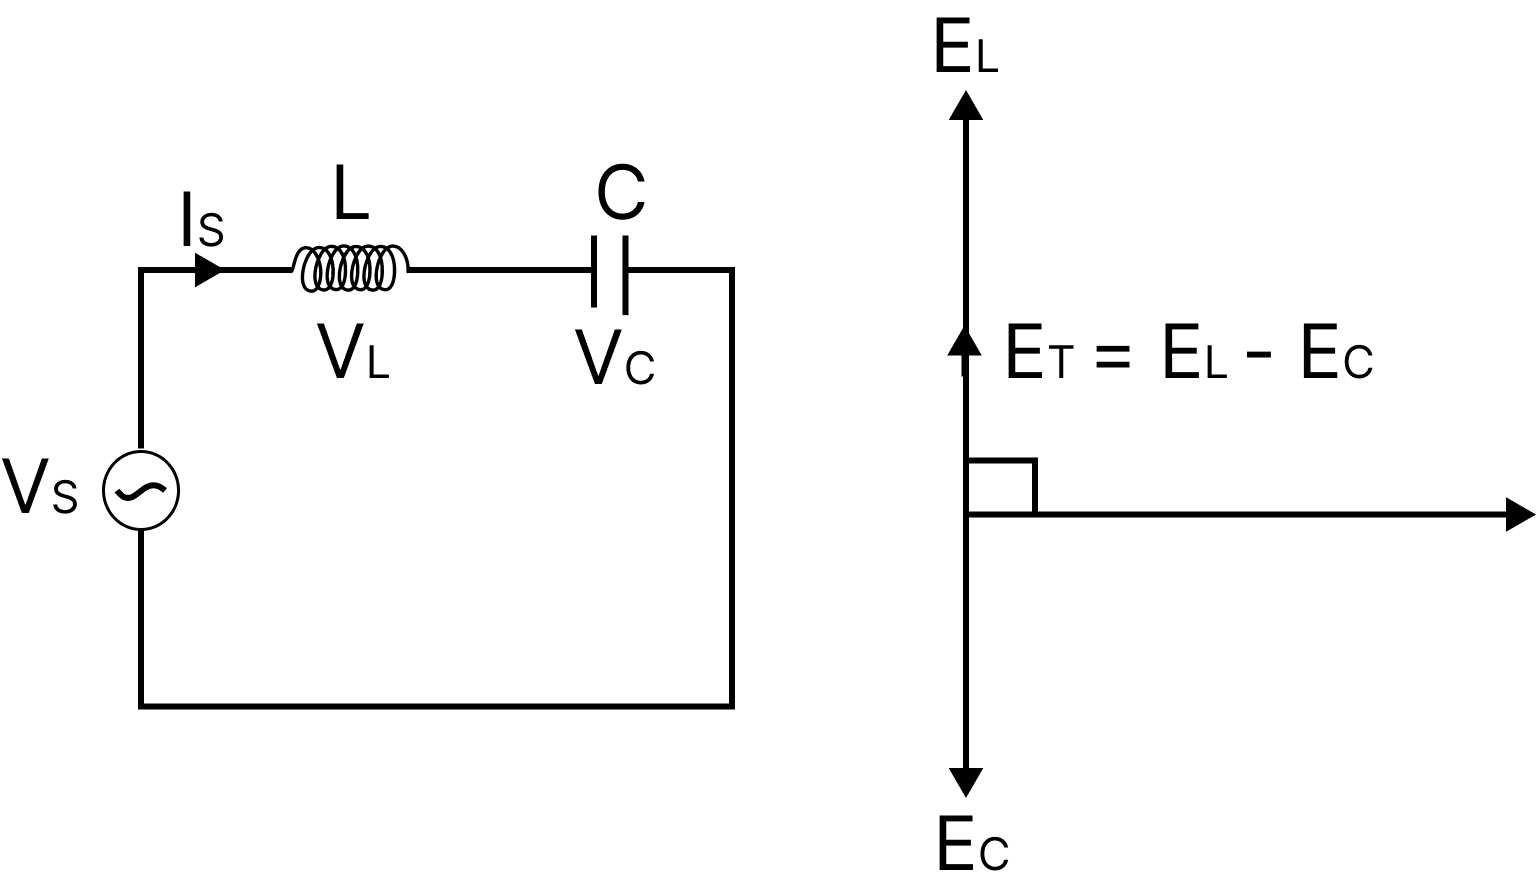 Phasor diagram of an LC circuit